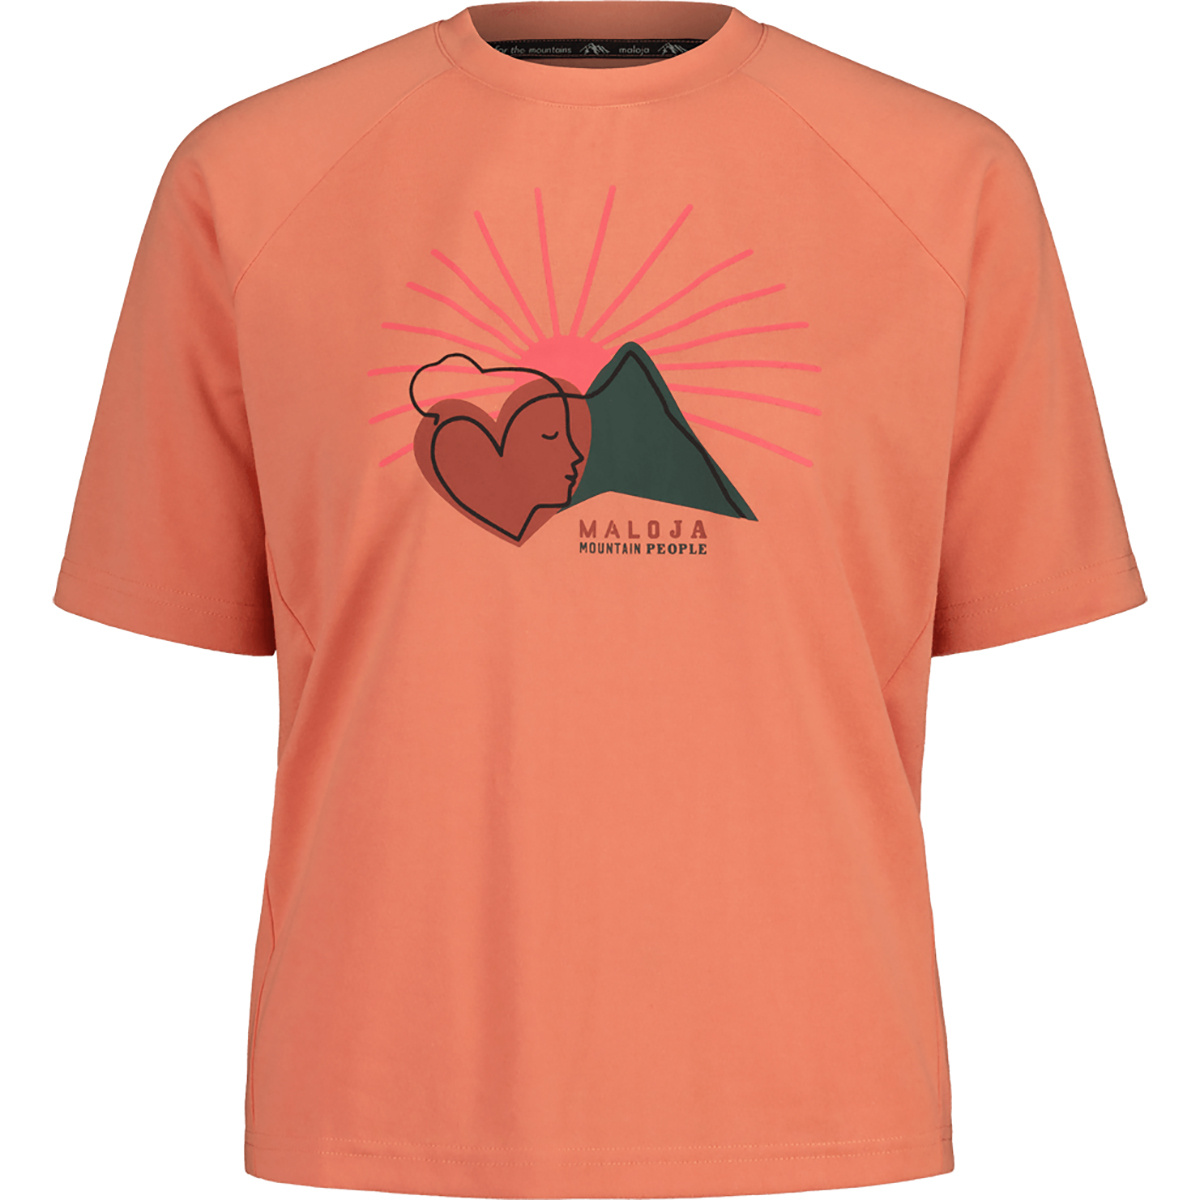 Image of Maloja Donna T-Shirt DambelM. Mountain